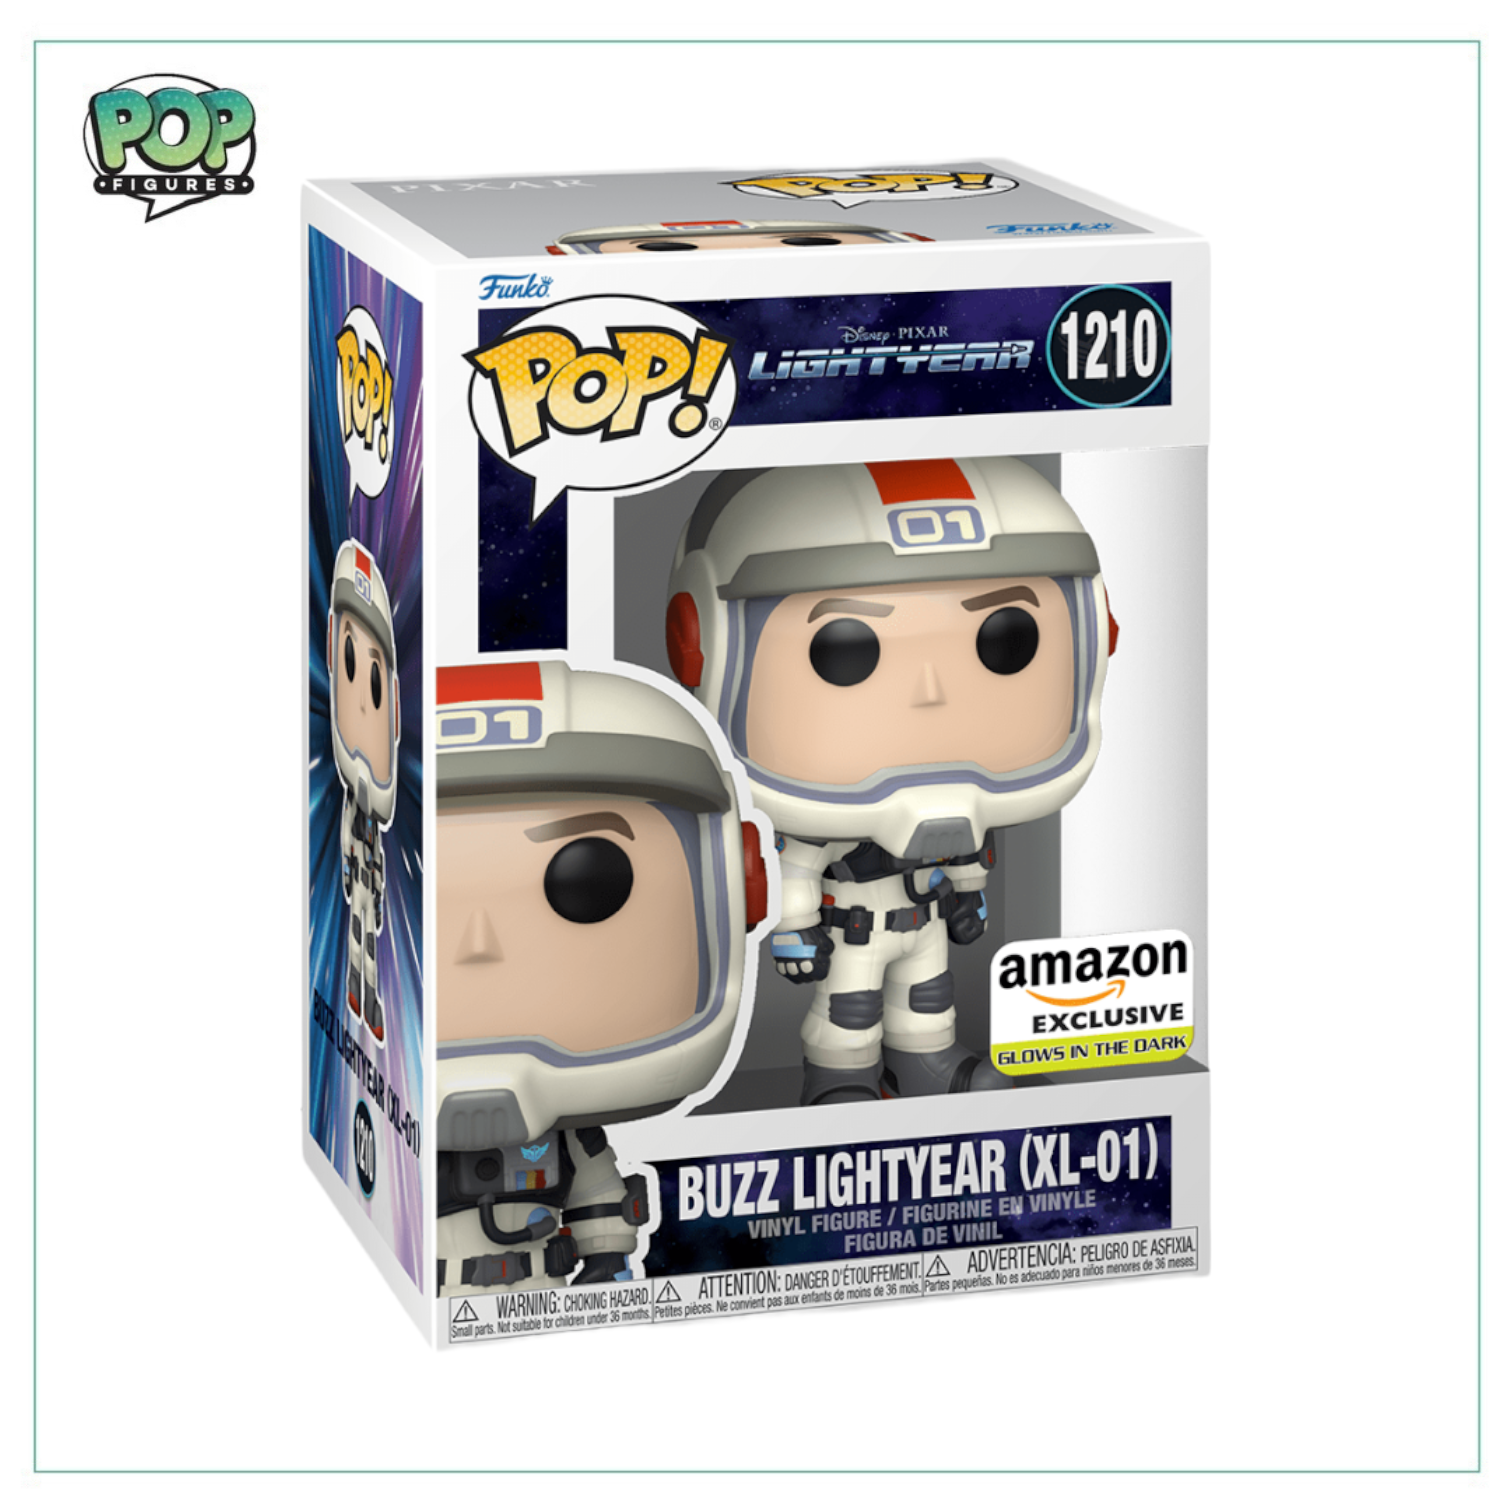 Buzz Lightyear (XL-01) #1210 (Glows in The Dark) Funko Pop! Lightyear - Amazon Exclusive